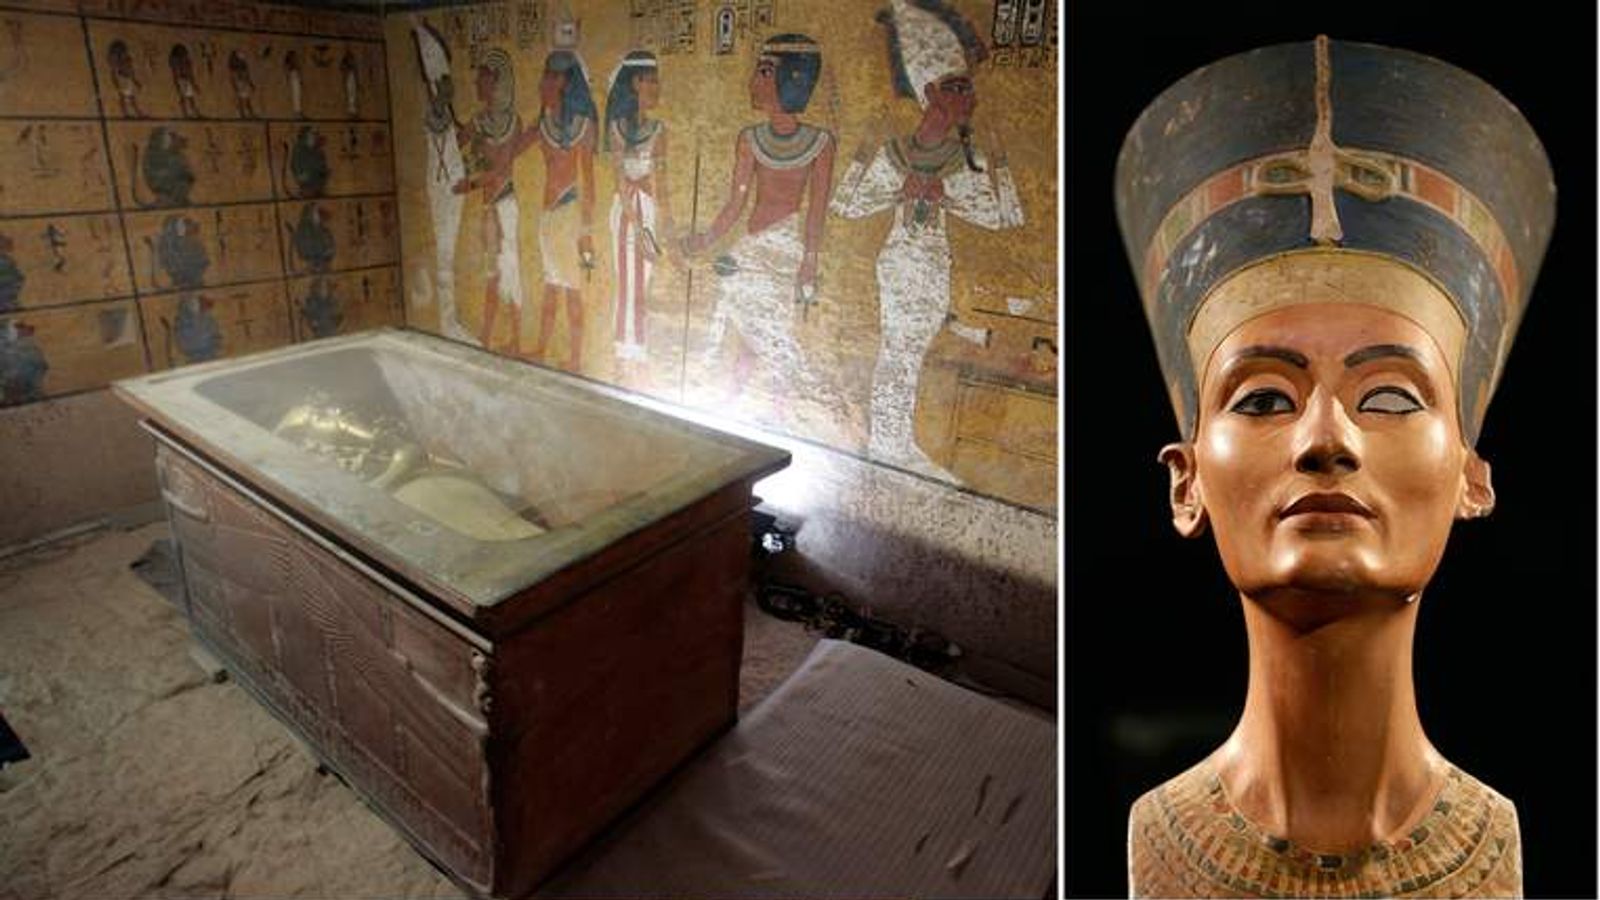 Was Nefertiti Buried Behind Secret Doorways